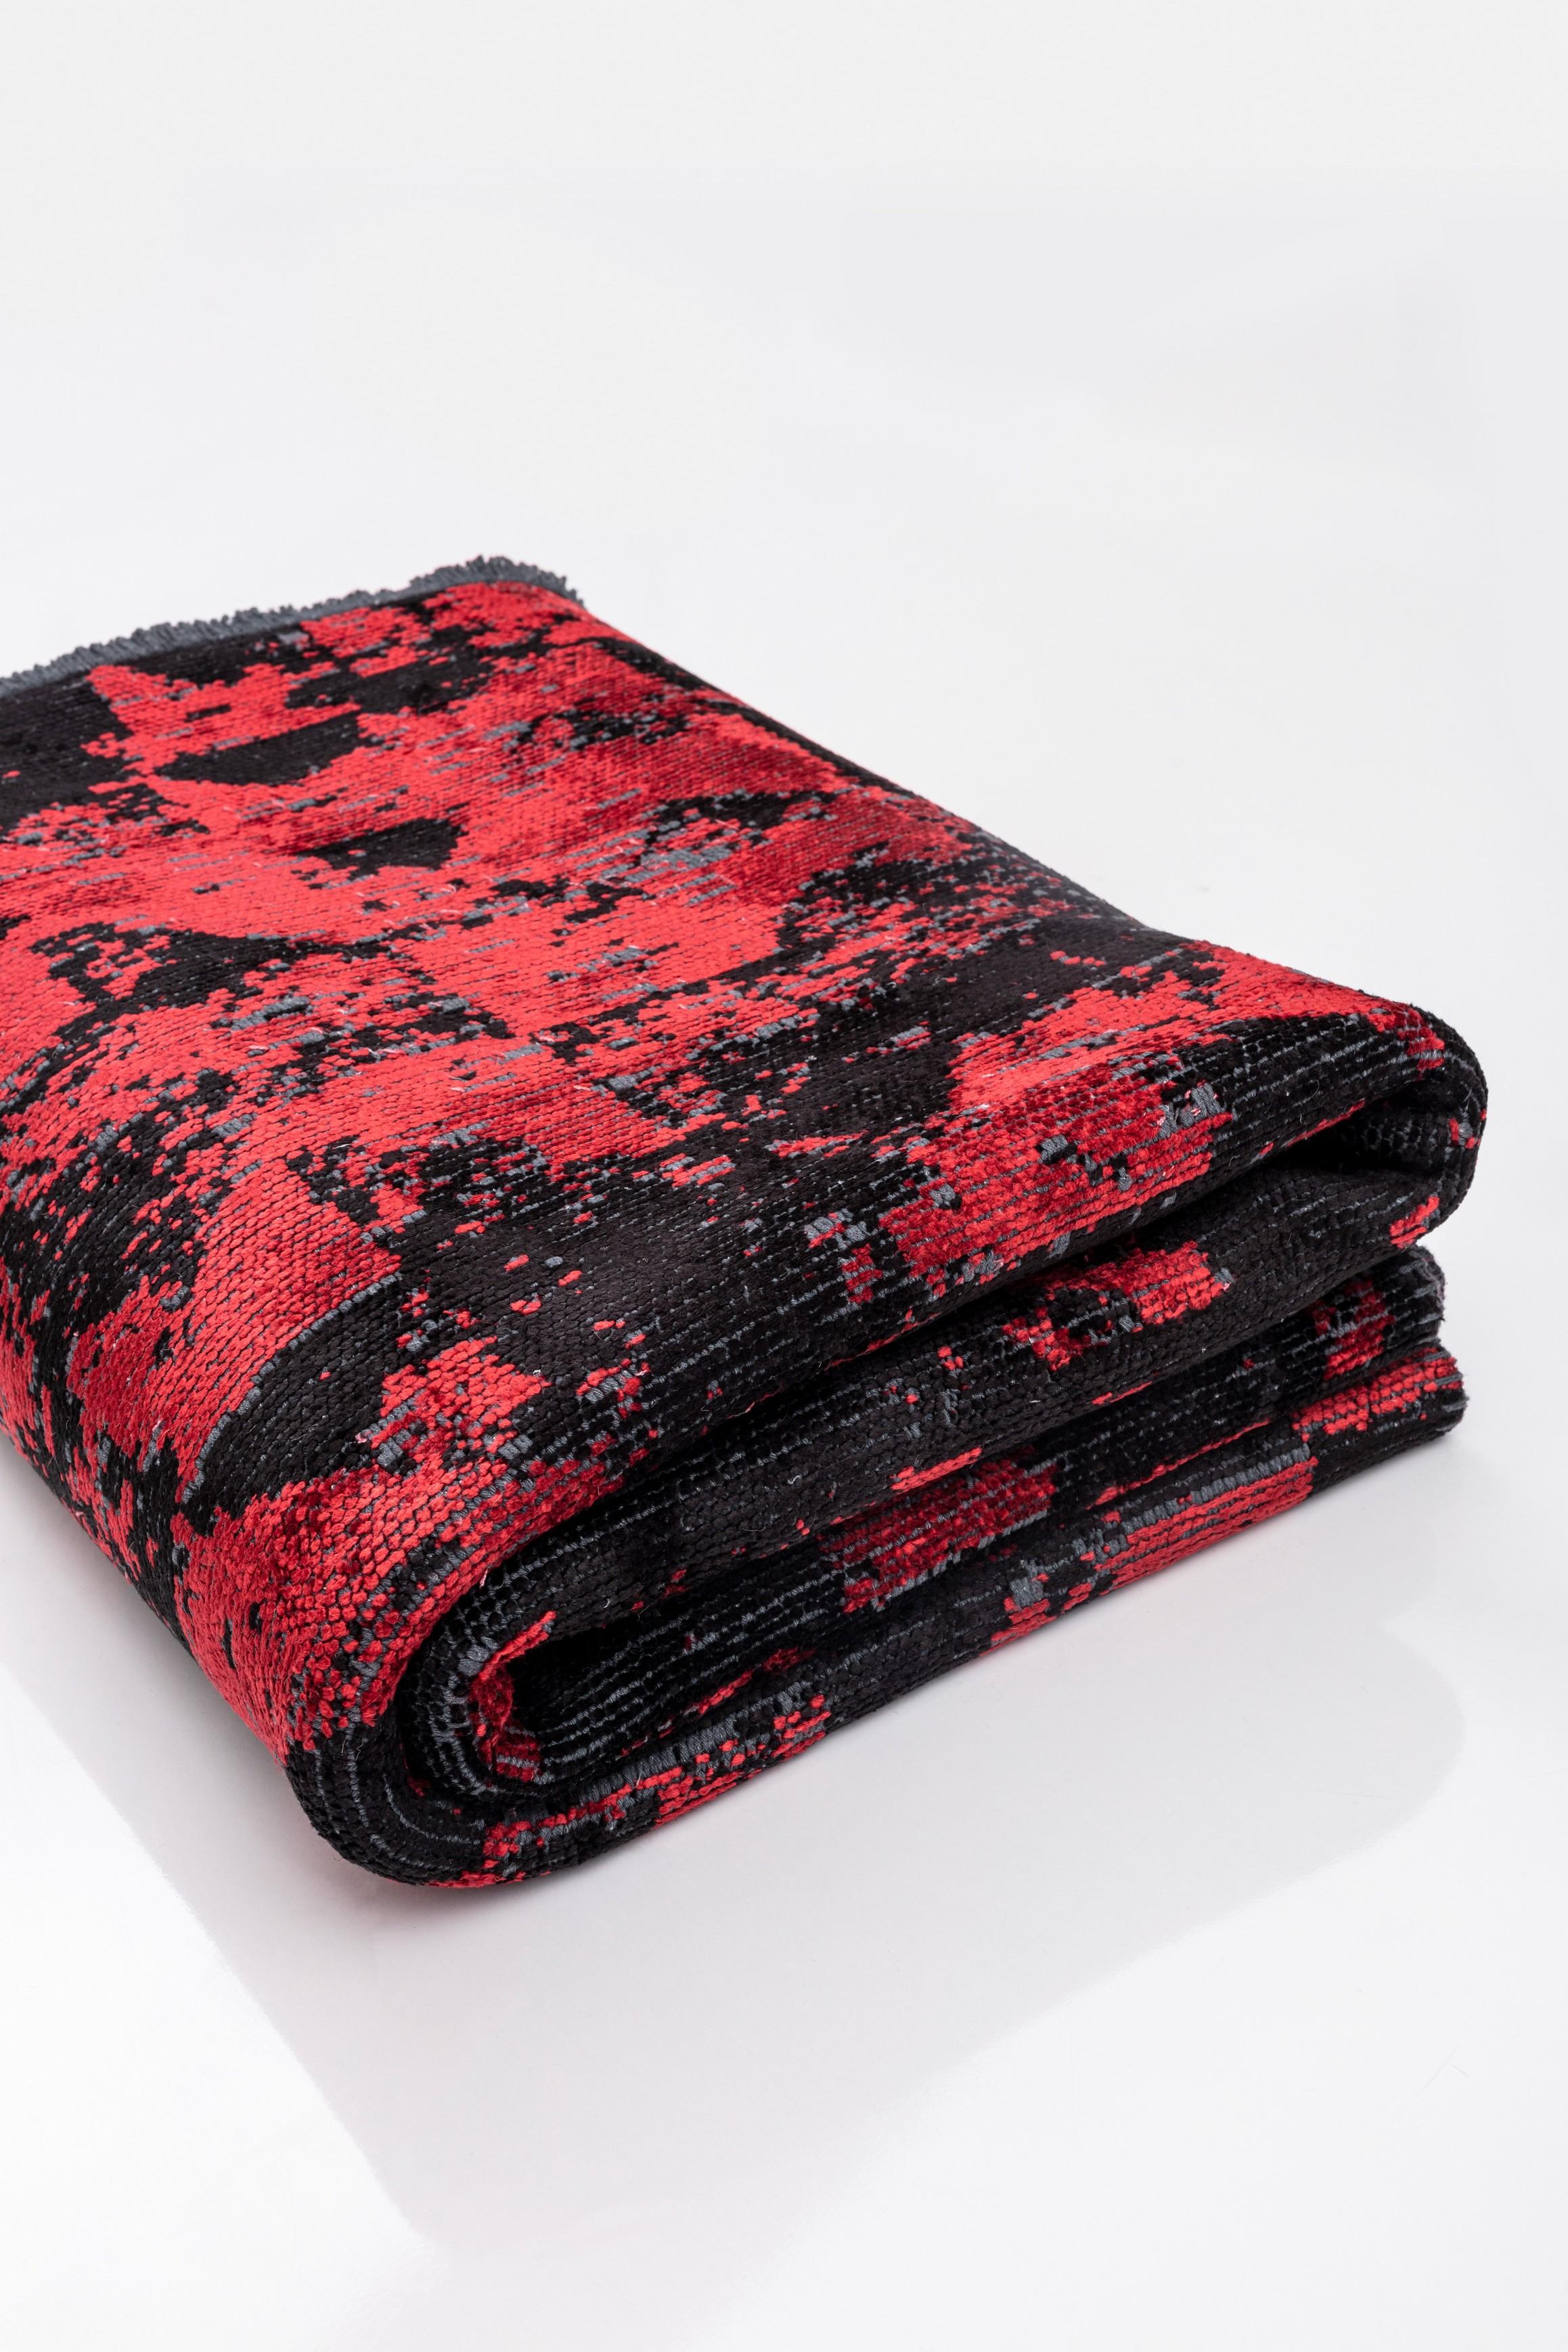 Im Angebot: Modern Camouflage Luxury Hand-Finished Area Rug,  (Rot) 4